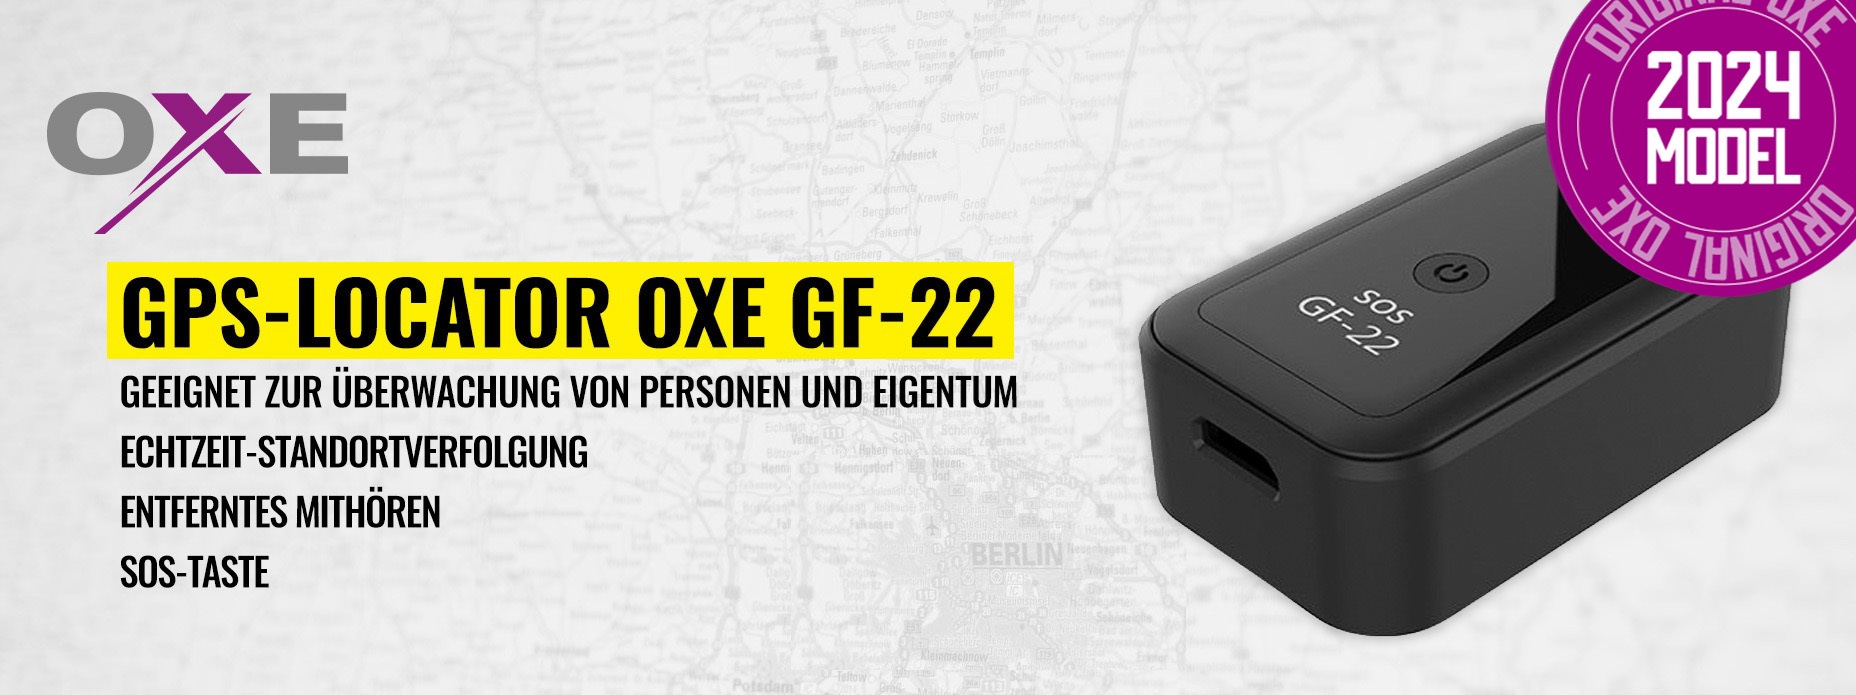 GPS-LOCATOR OXE GF-22